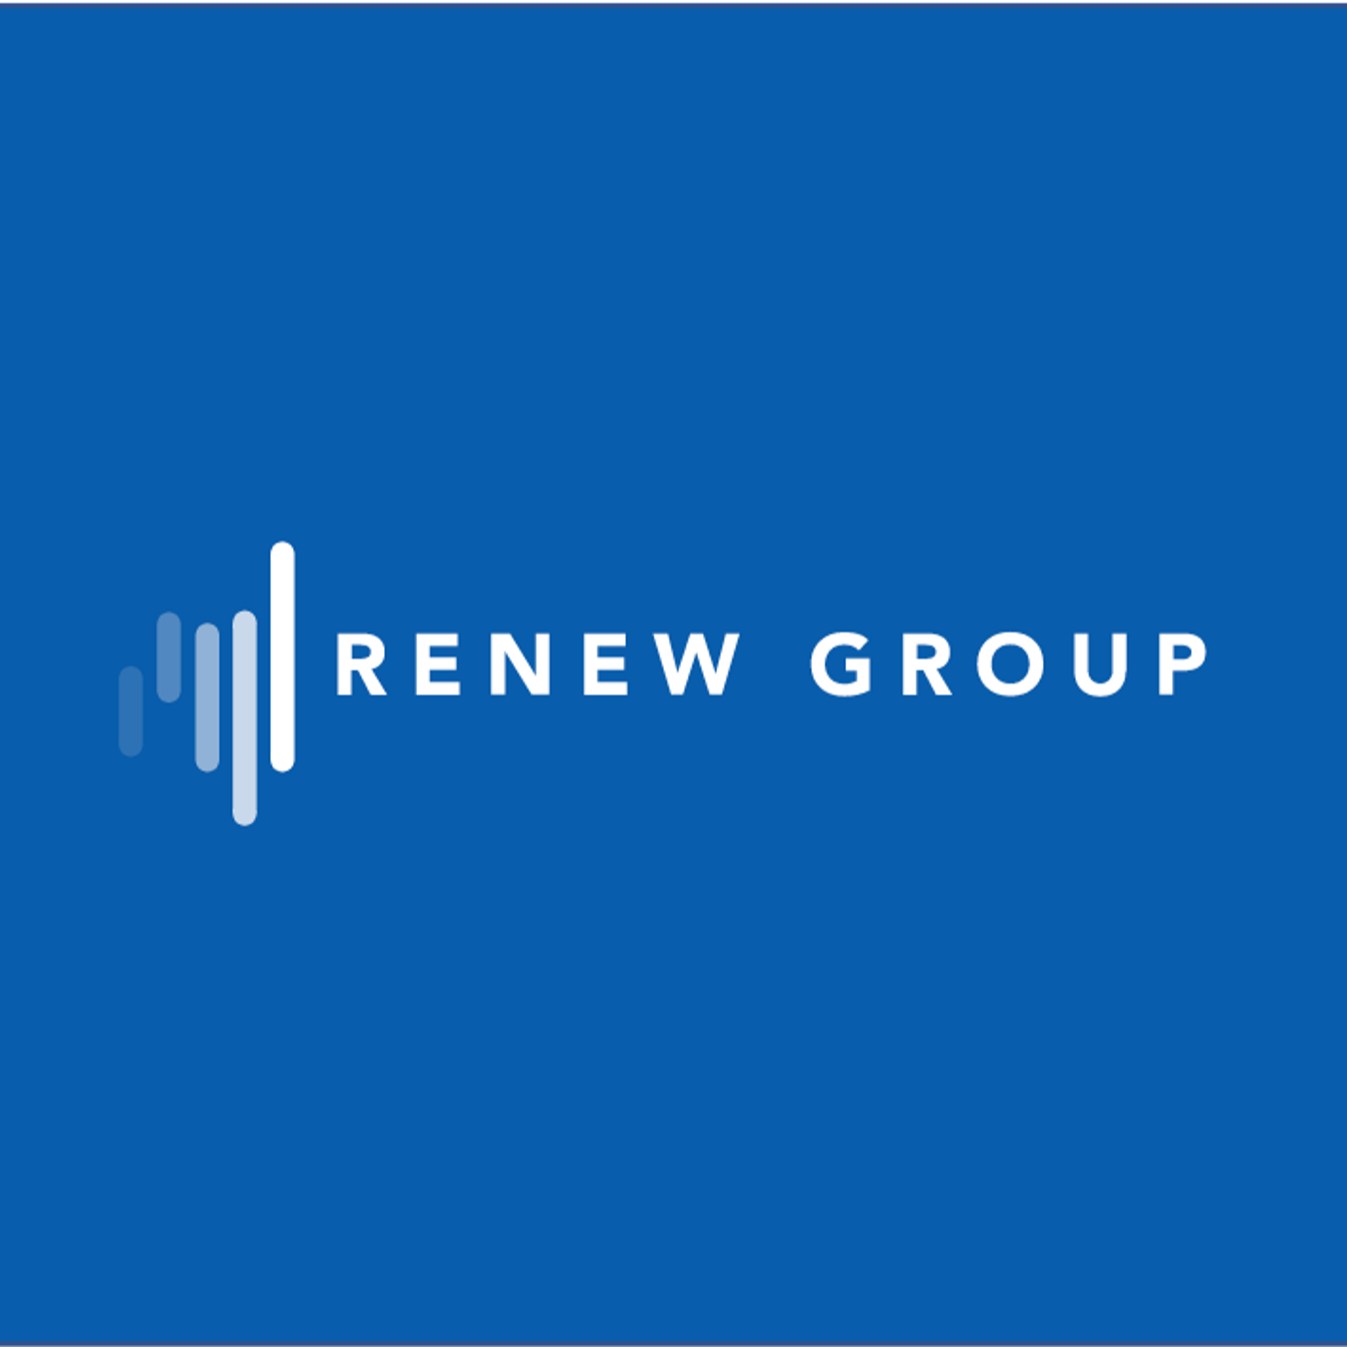 renew group logo blue-1